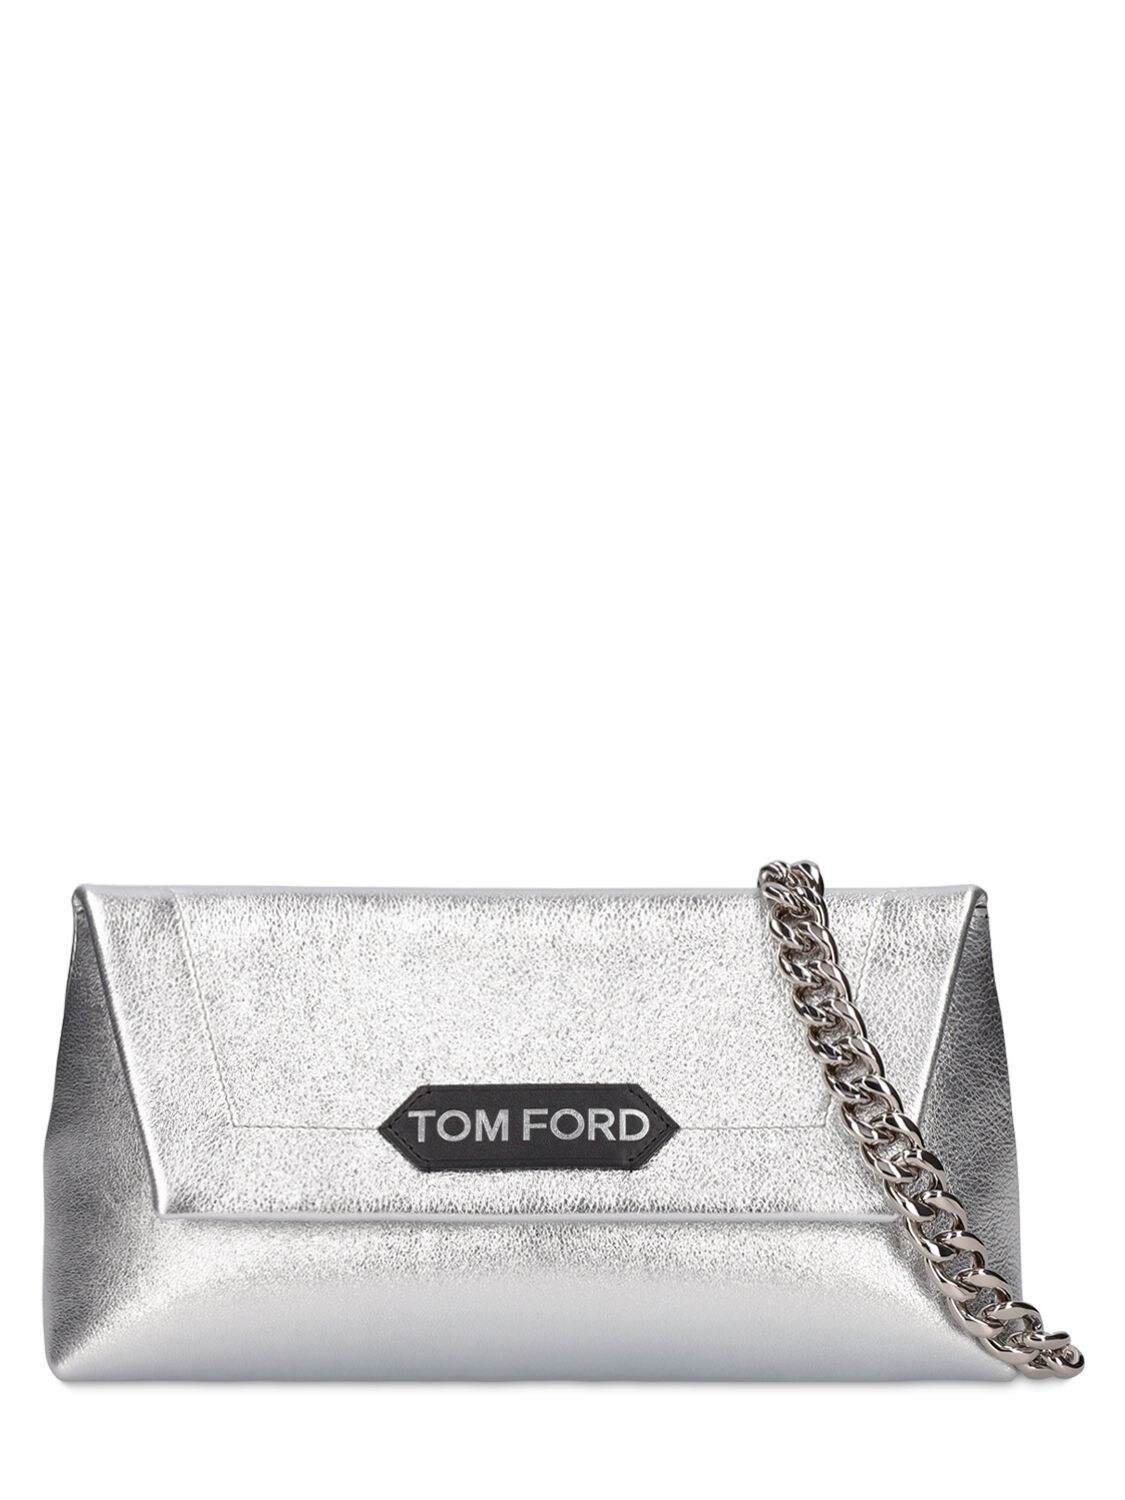 Tom Ford Label Small Handbag